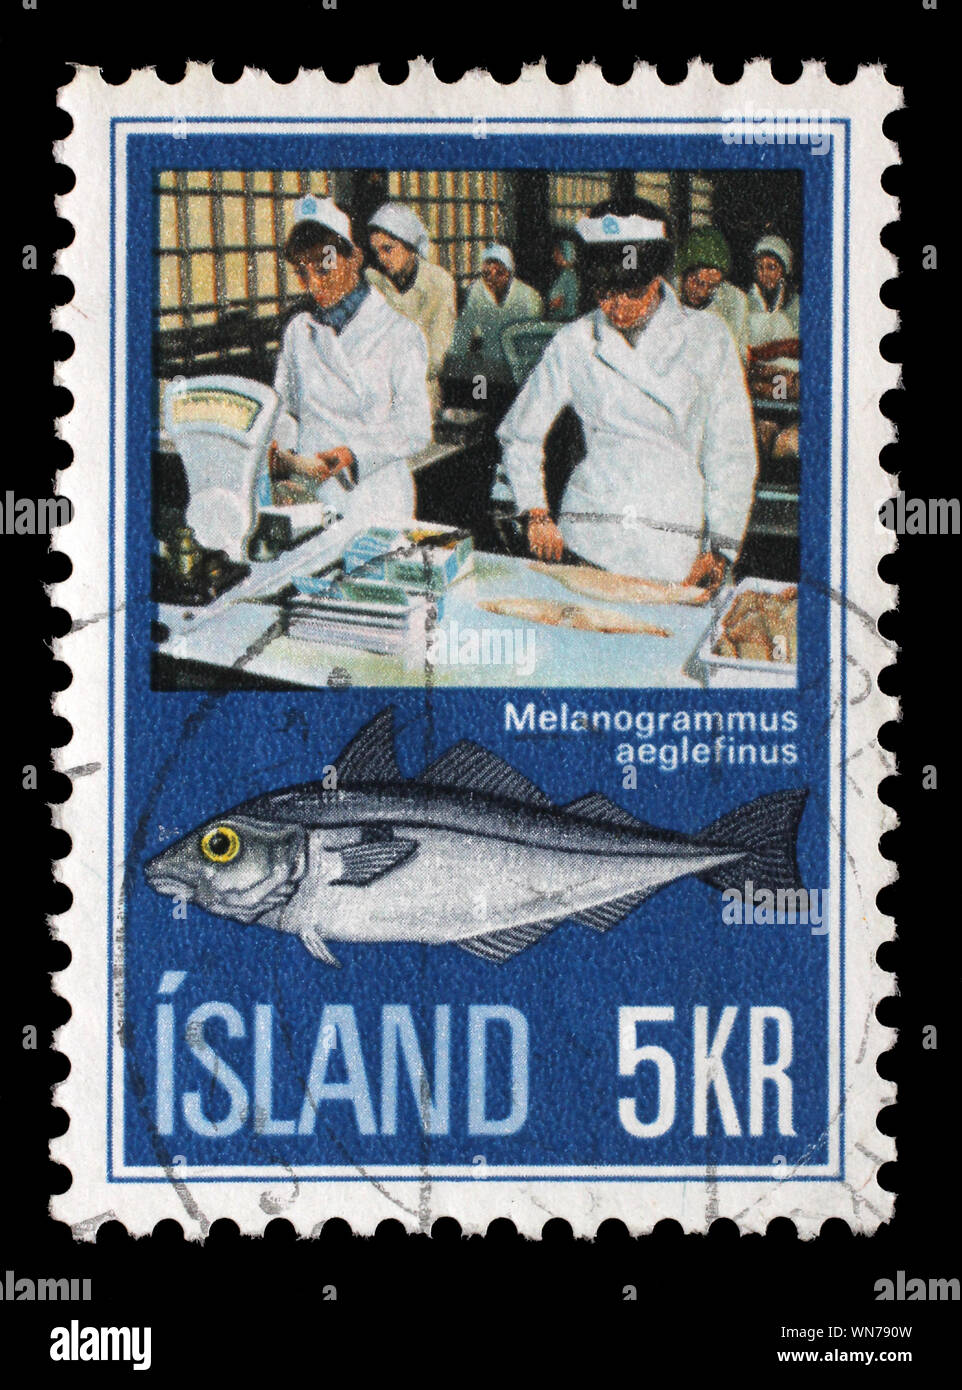 Stamp issued in Iceland shows Haddock (Melanogrammus aeglefinus), Icelandic Fishing Industry, circa 1971. Stock Photo